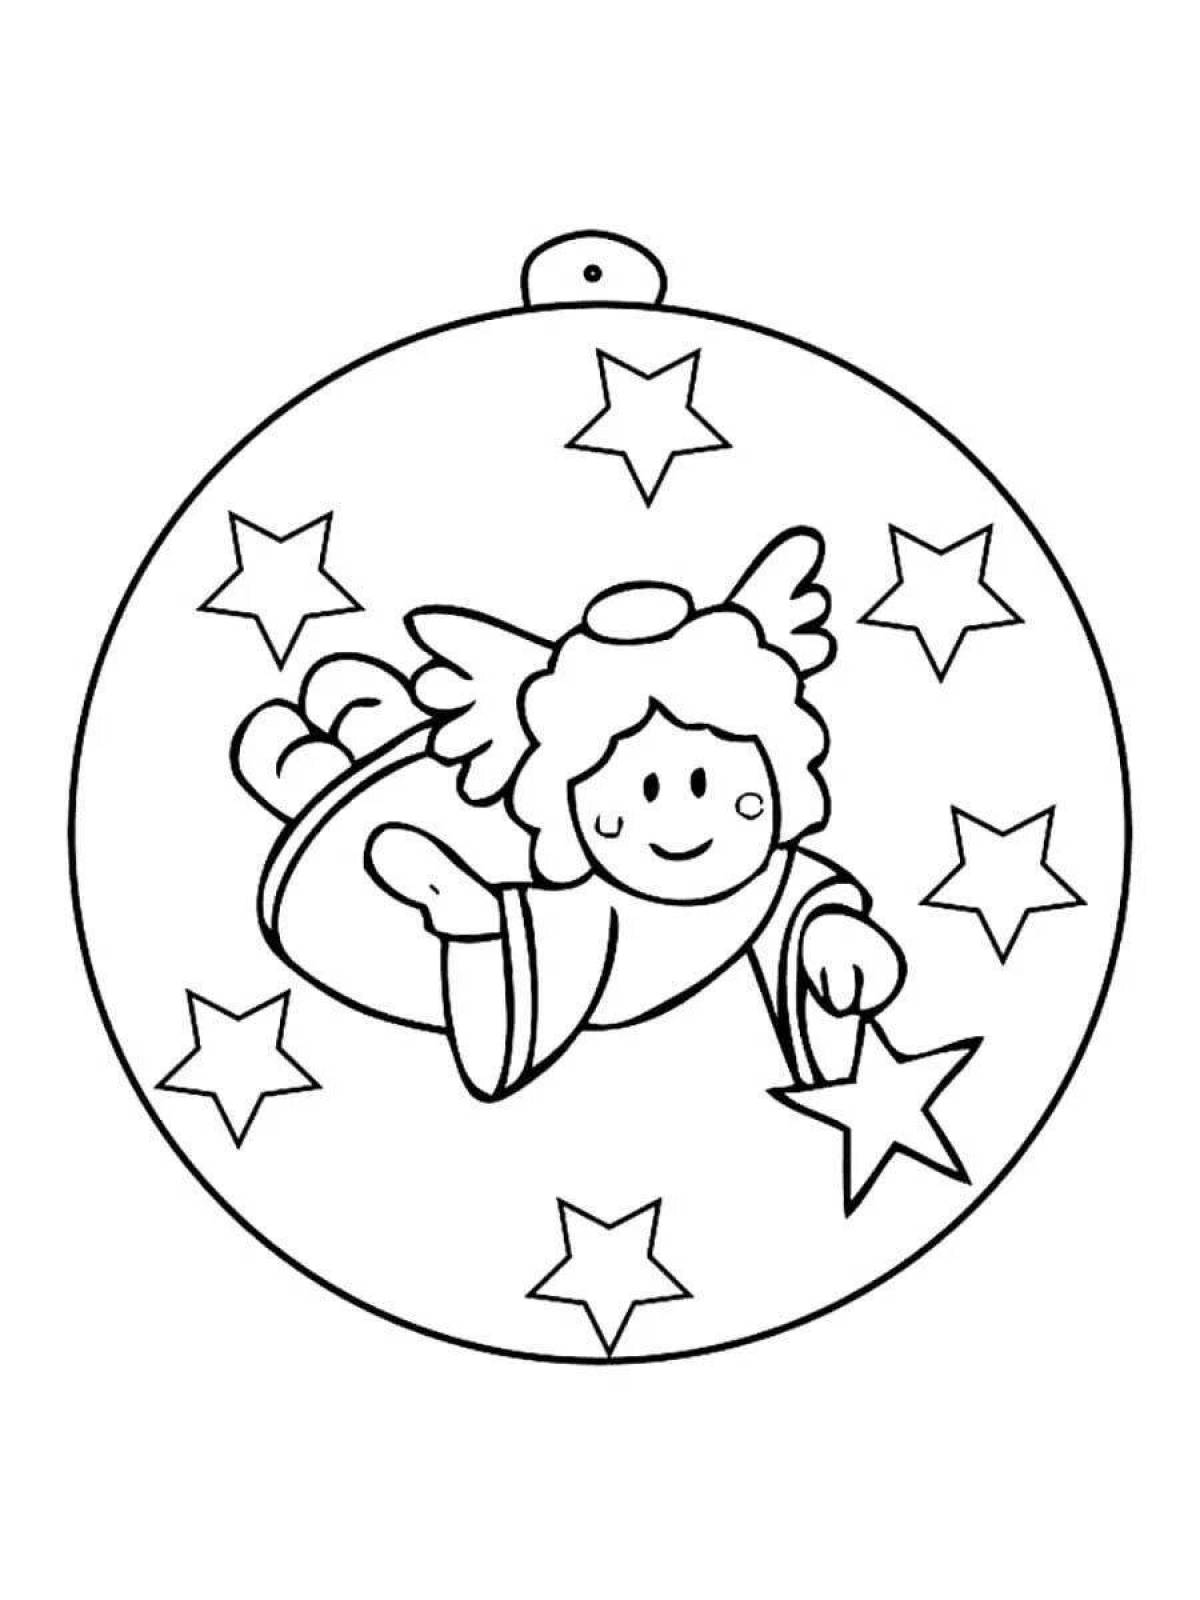 Magic Christmas ball coloring book for kids